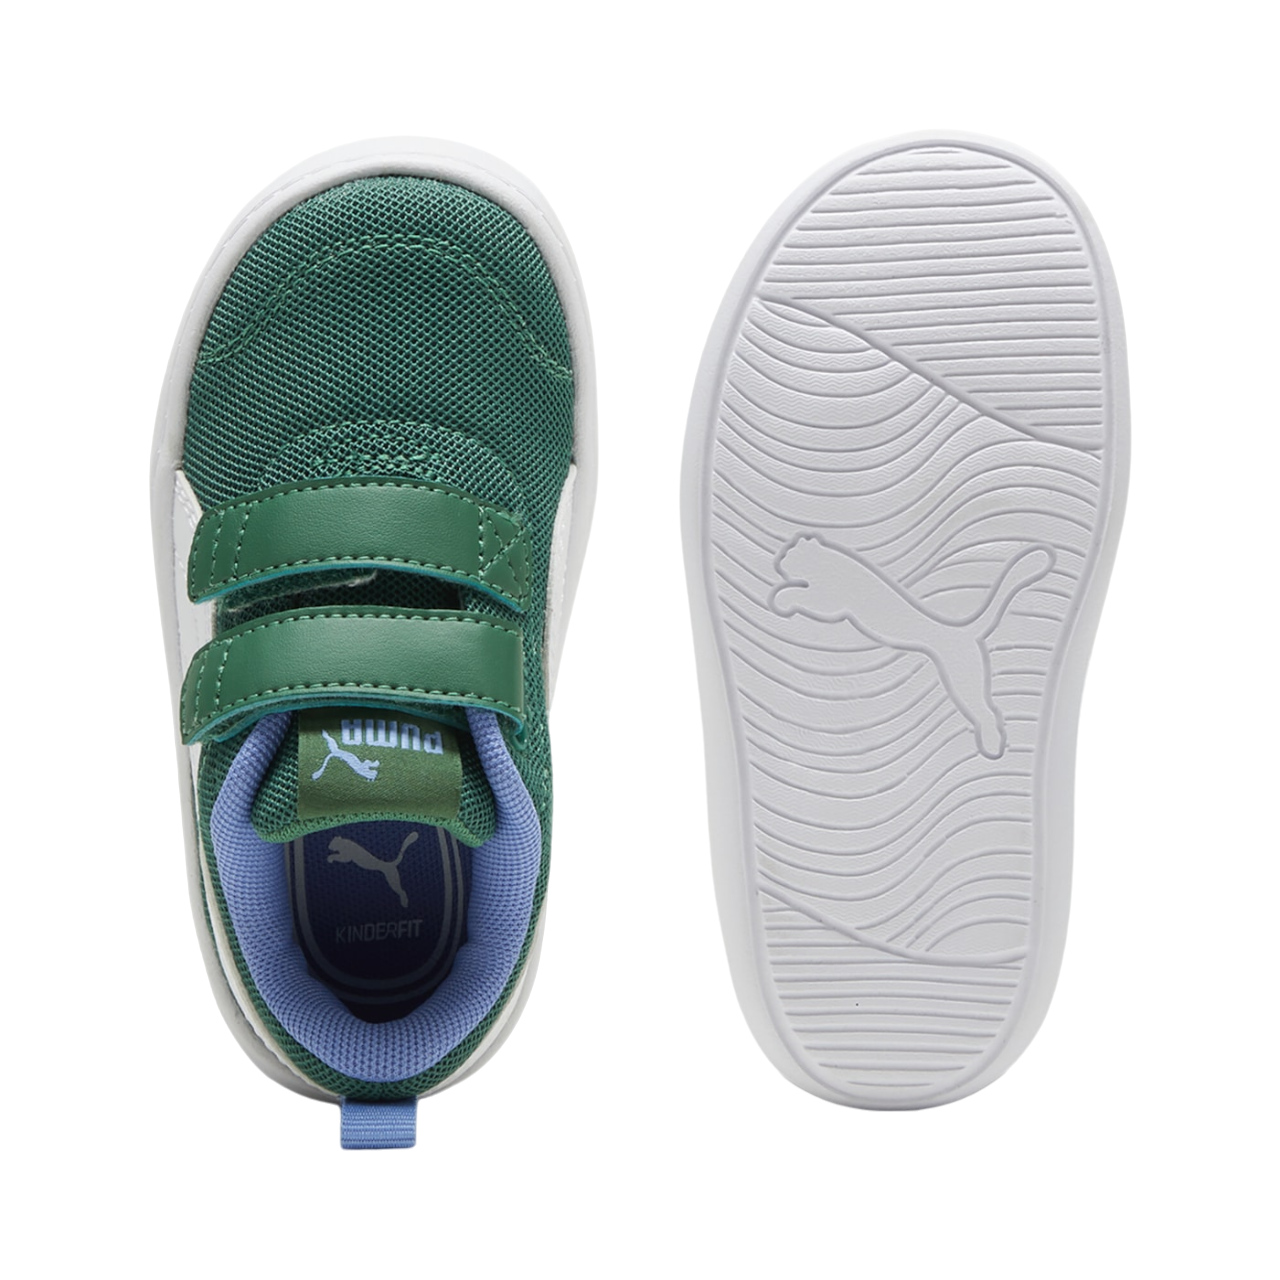 Puma sneakers with strap for children Courtflex v2 Mesh V 371759 18 screw green